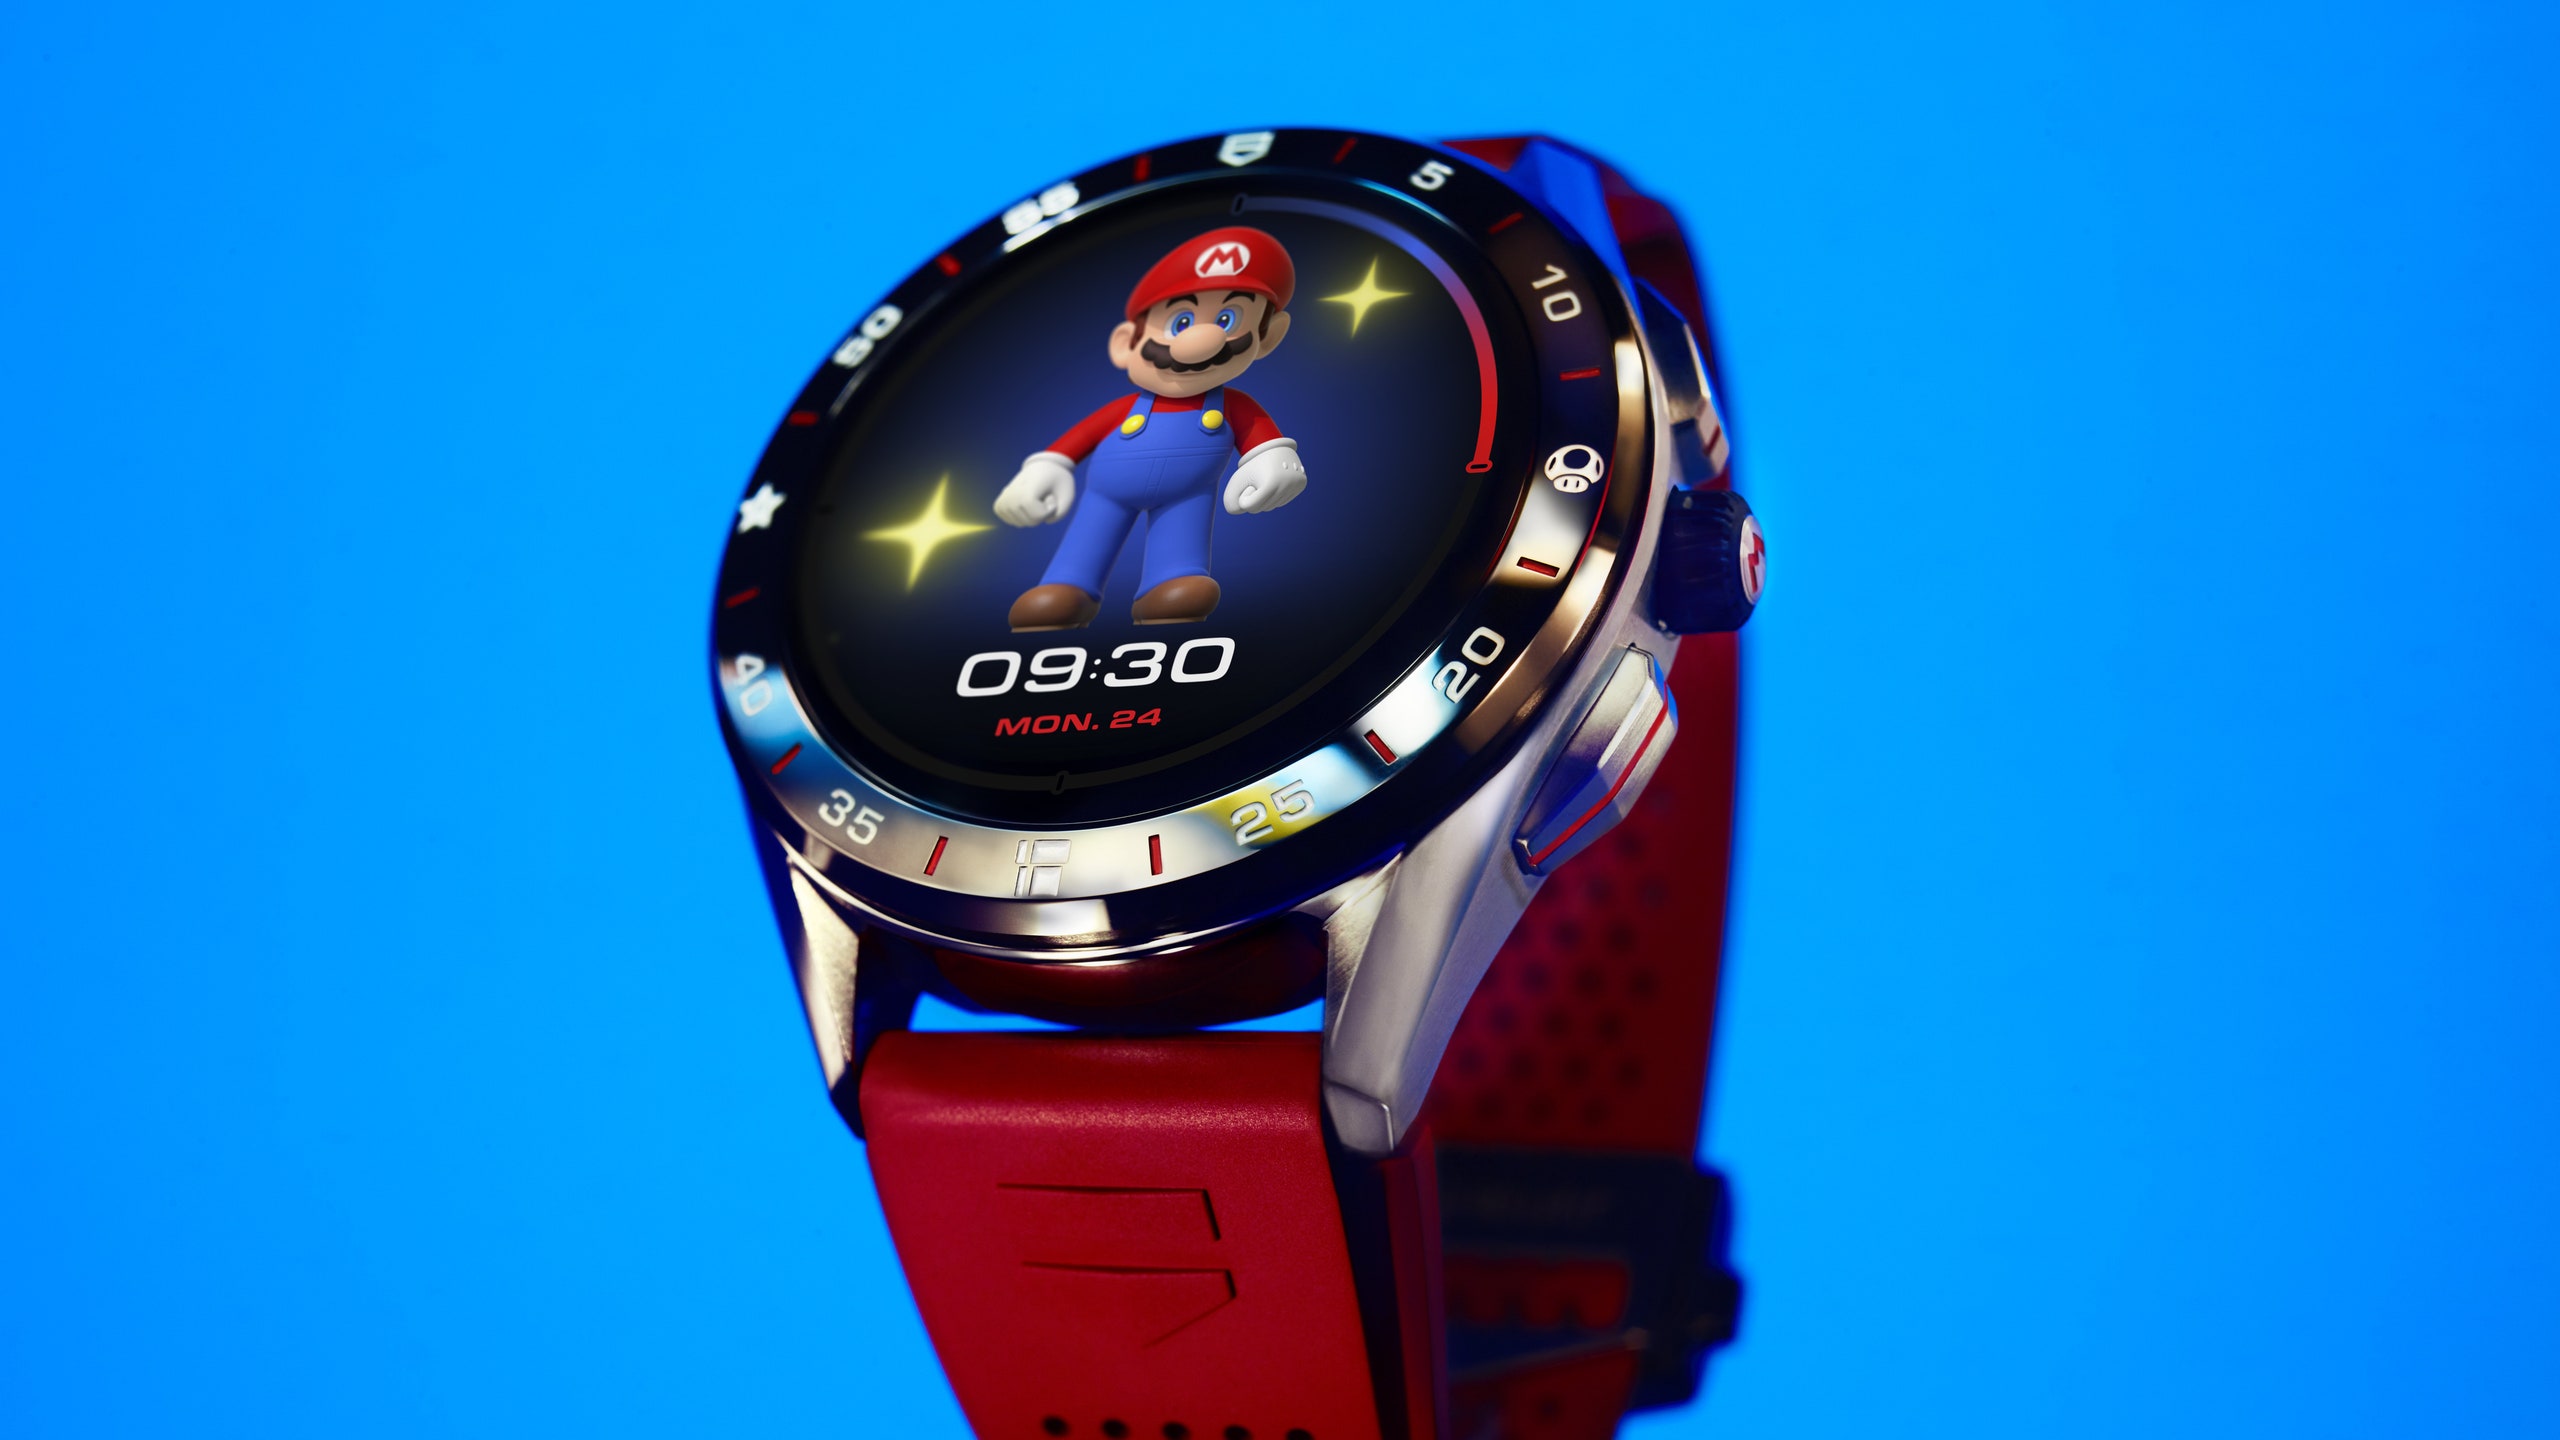 Аксессуар дня часы TAG Heuer изображением Super Mario